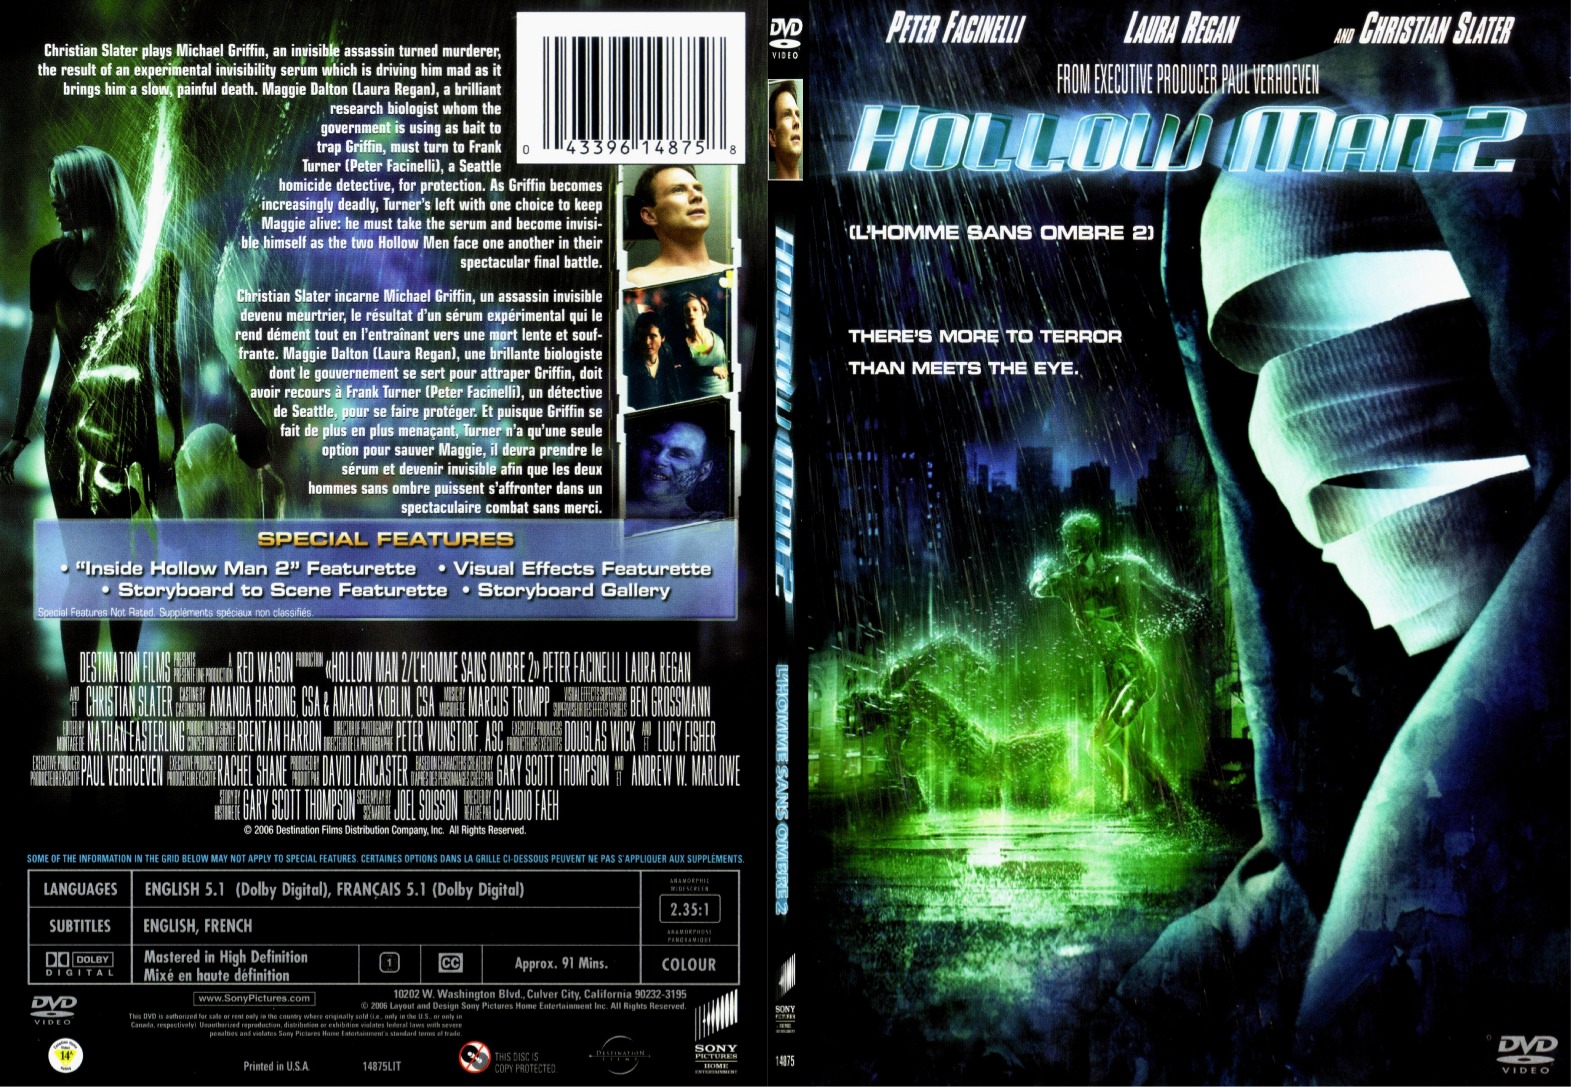 Jaquette DVD Hollow man 2 - SLIM